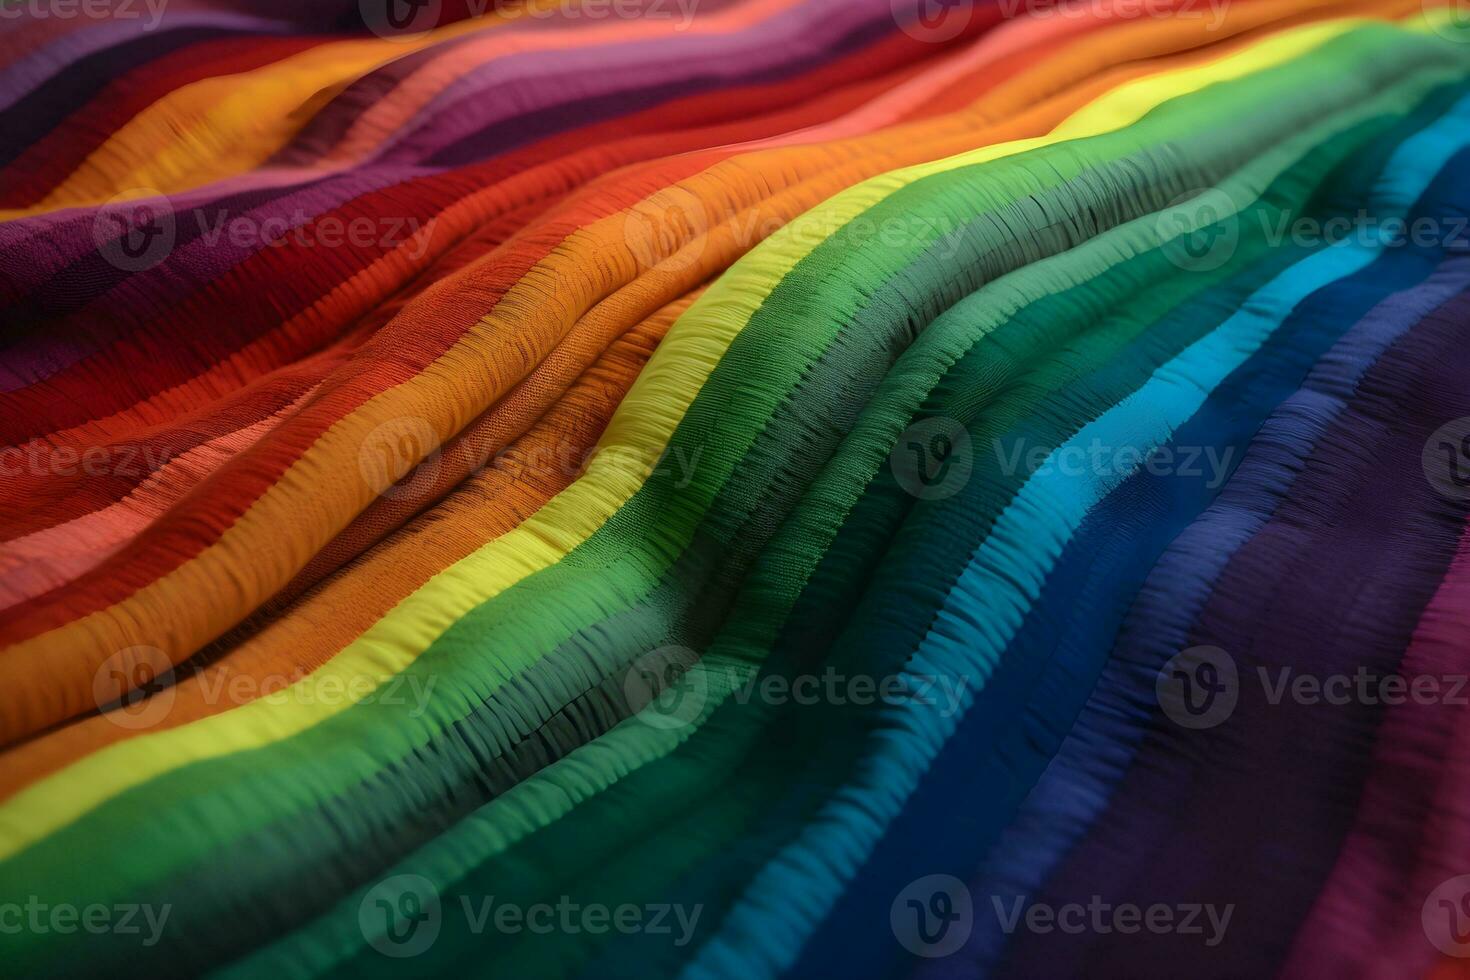 abstract background of rainbow silk photo